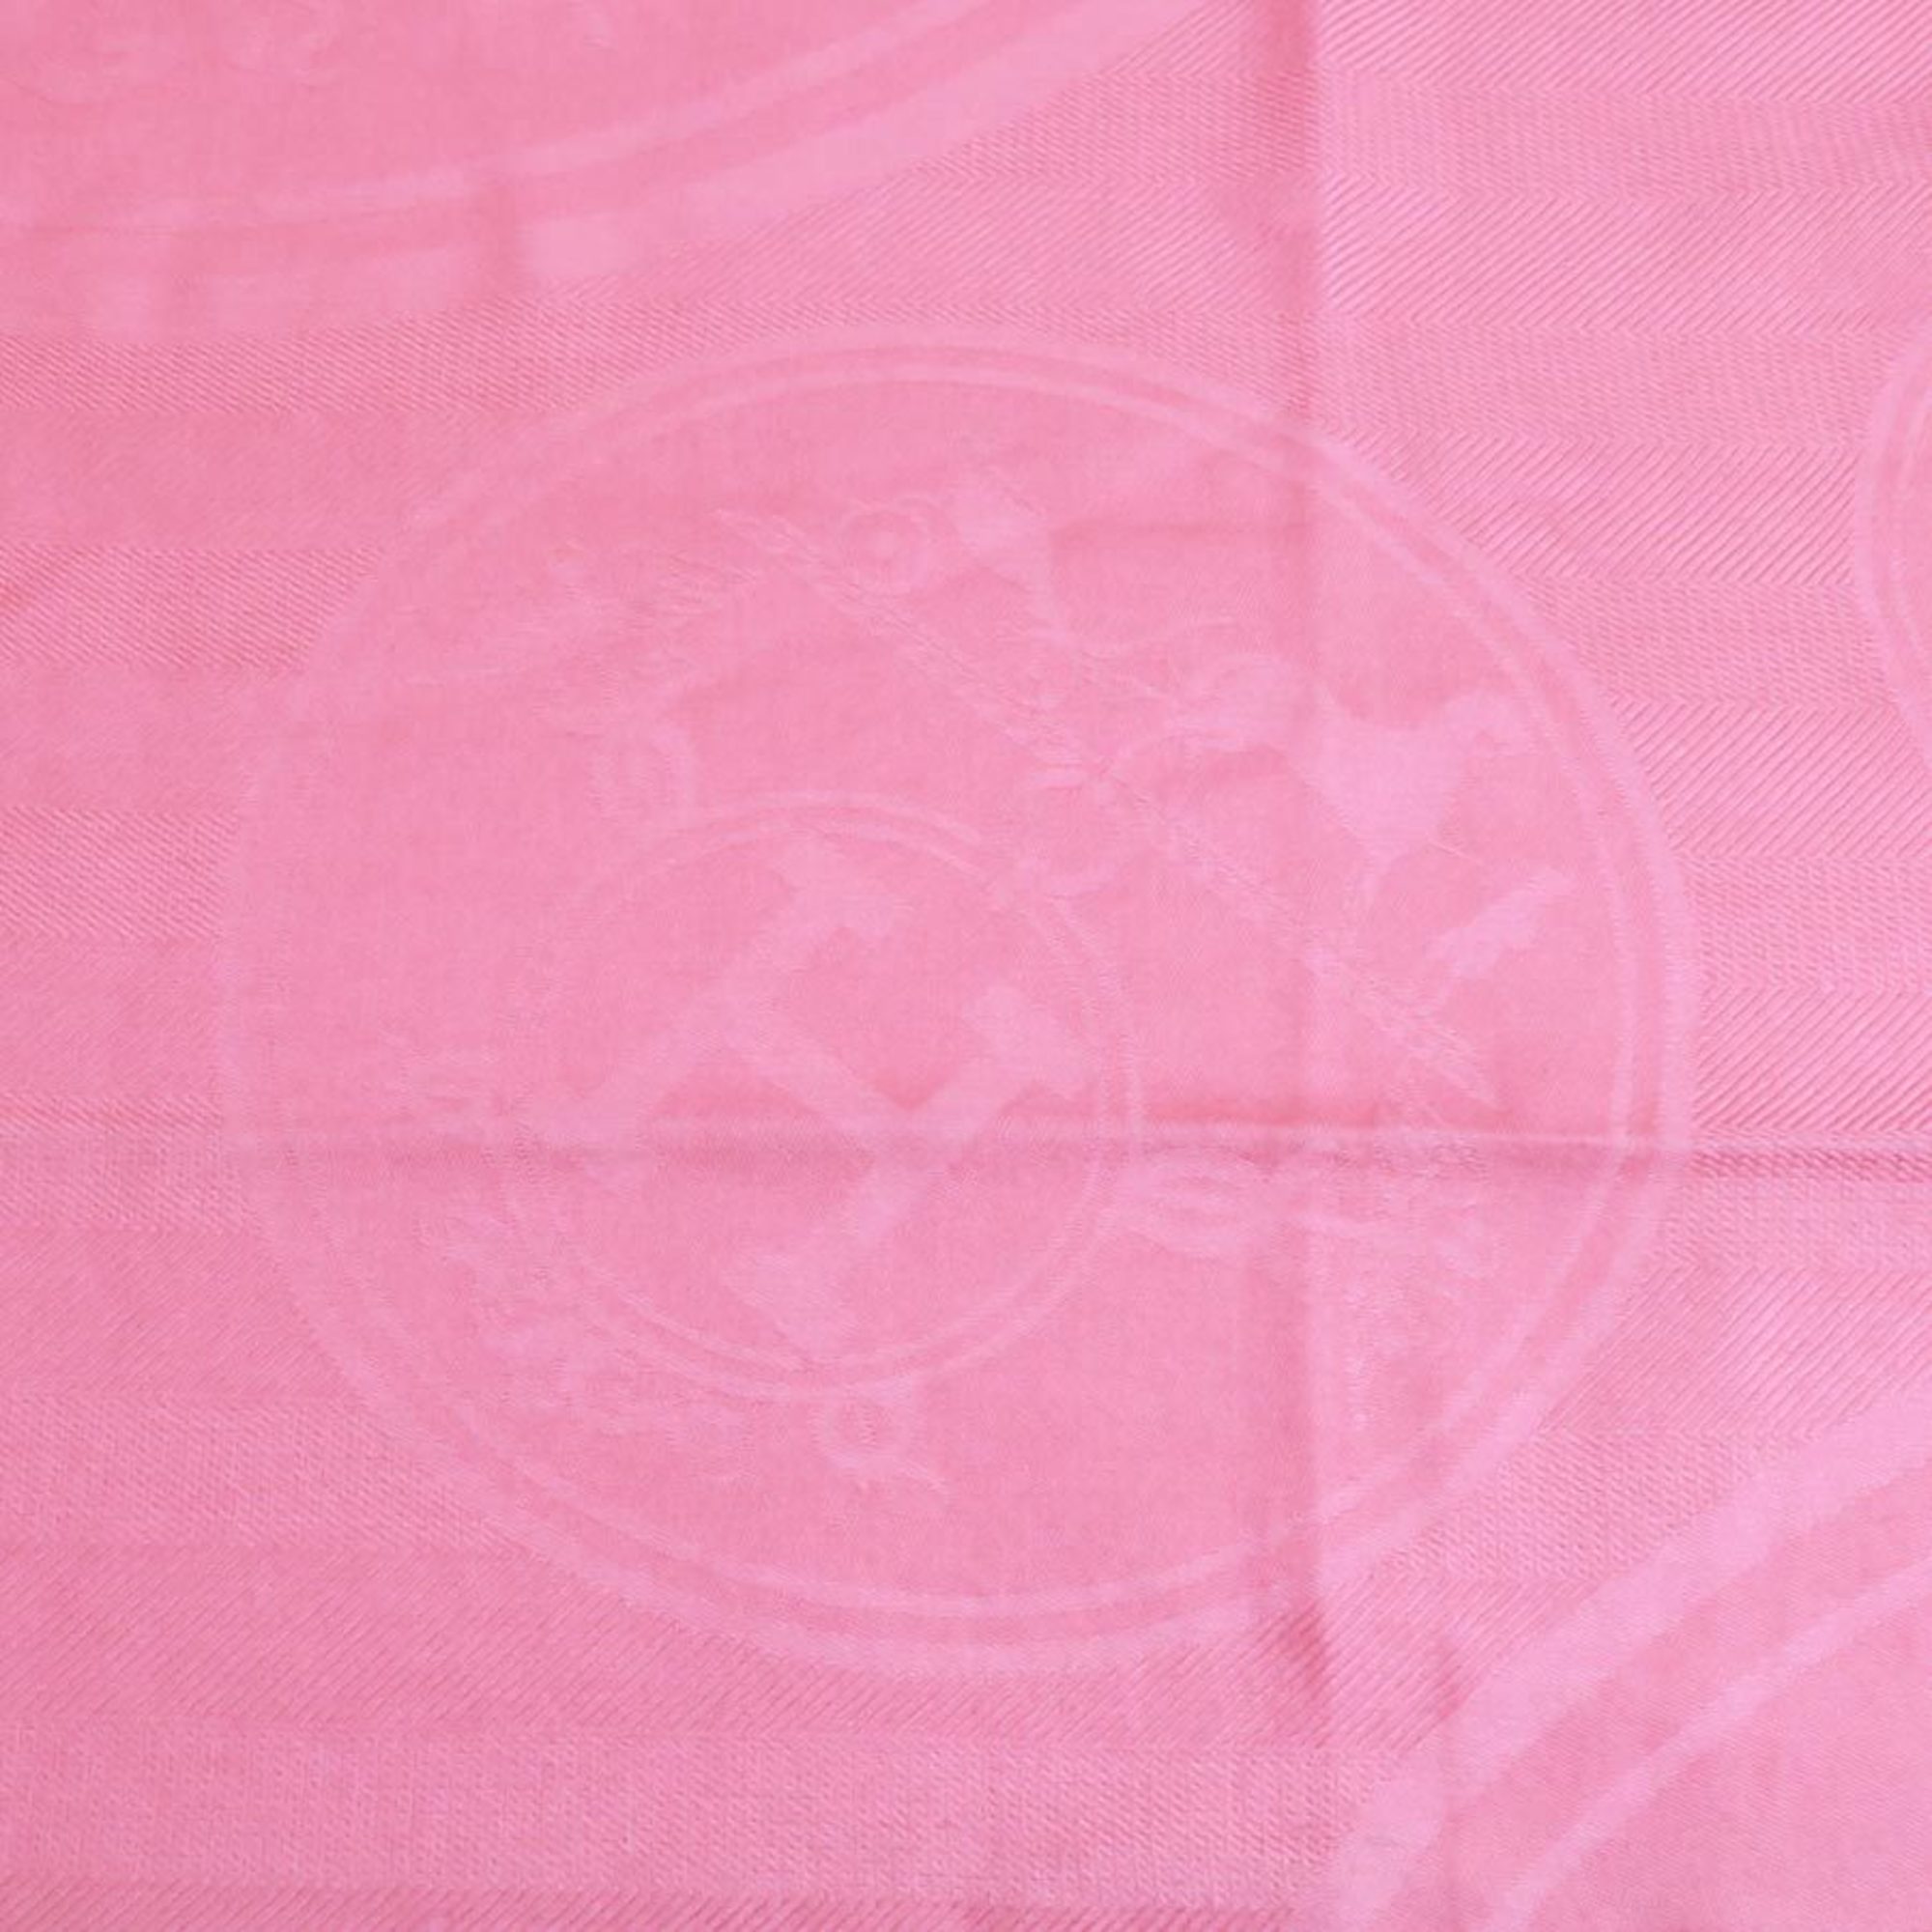 Hermes HERMES scarf shawl cashmere silk pink women's e58629f